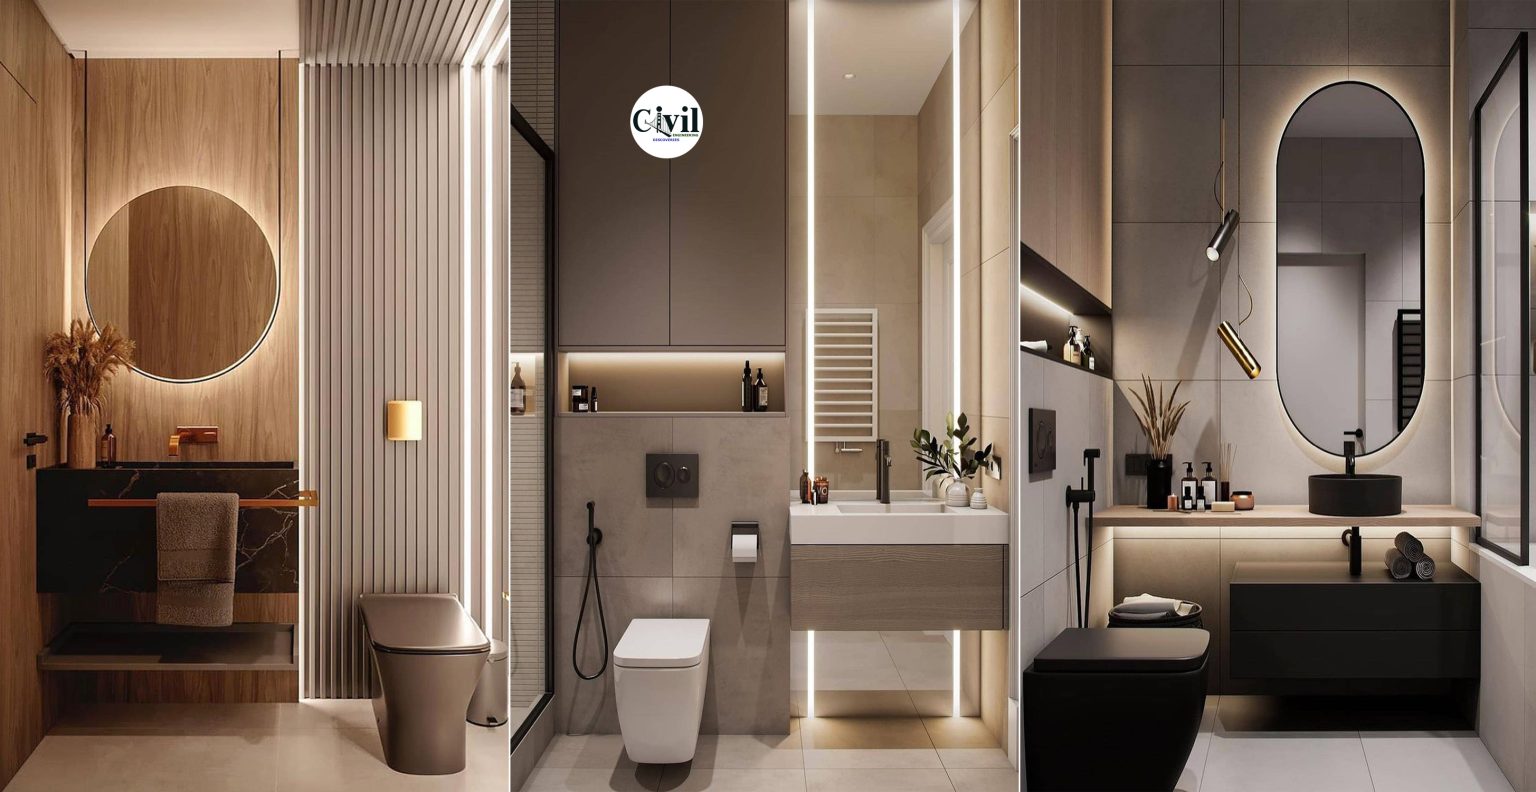 40 Luxury Modern Bathroom Design Ideas - 40 Luxury MoDern Bathroom Design IDeas 1536x792